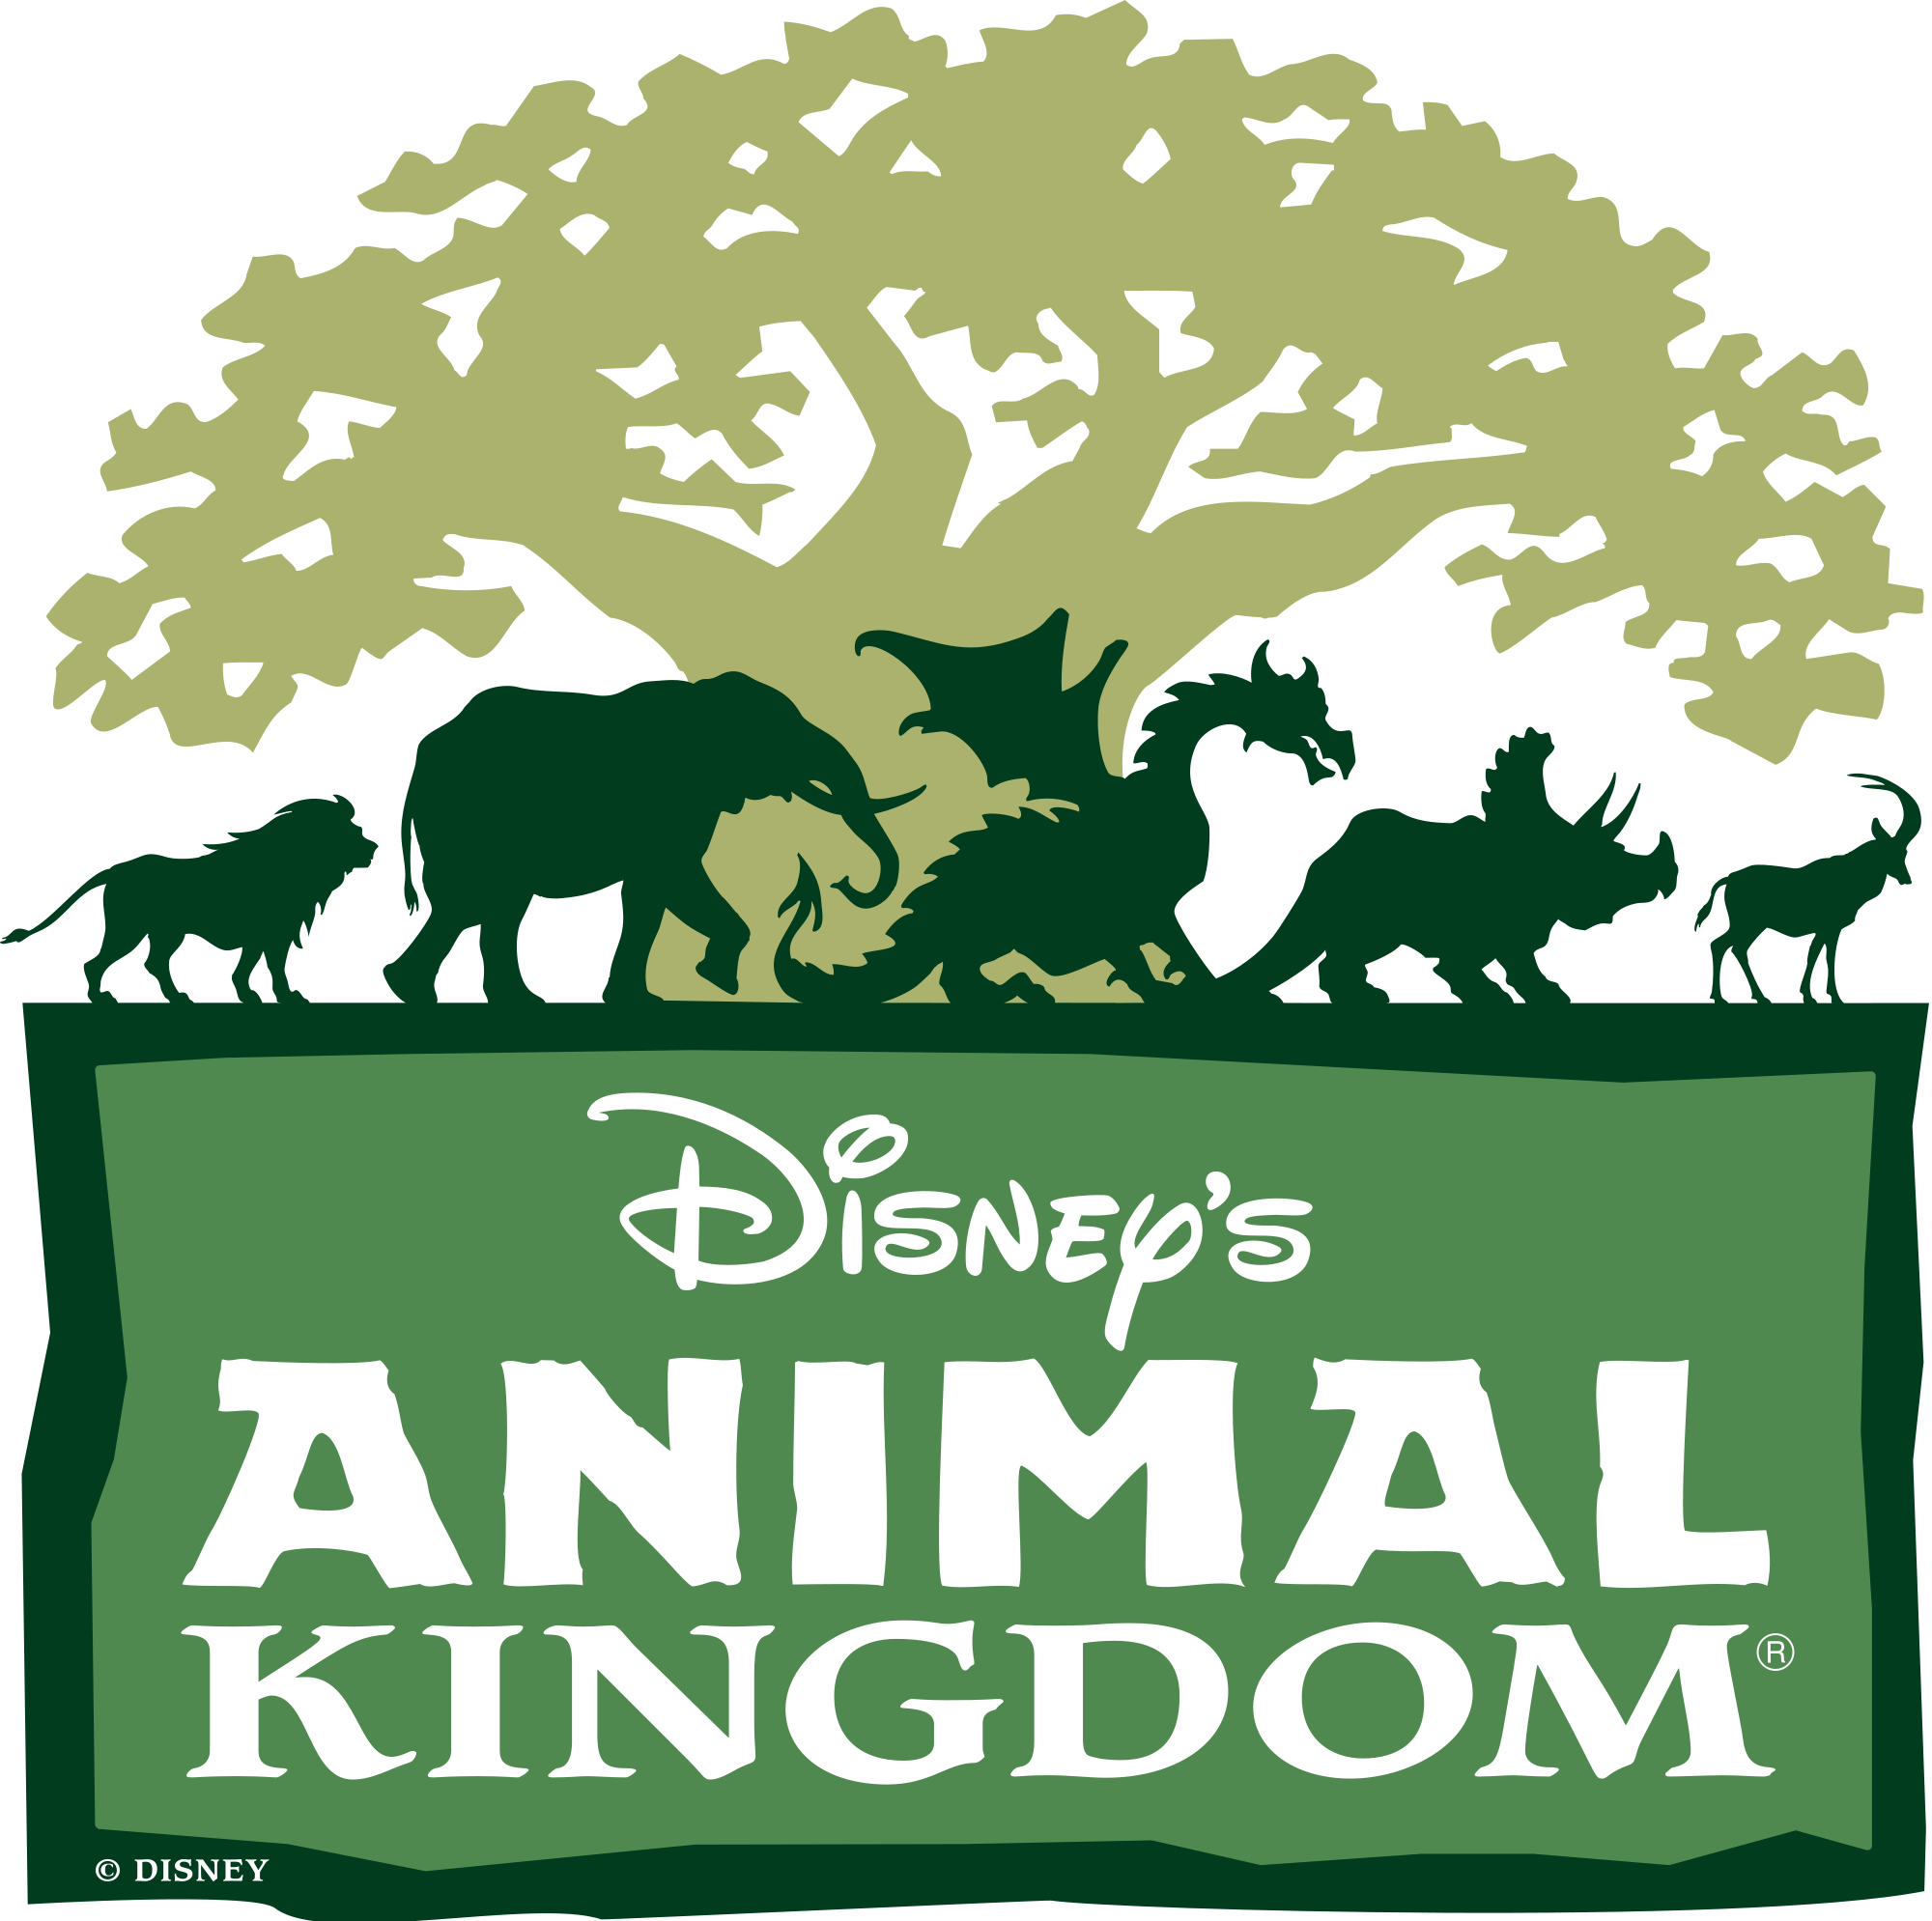 Disney's_Animal_Kingdom_logo.png